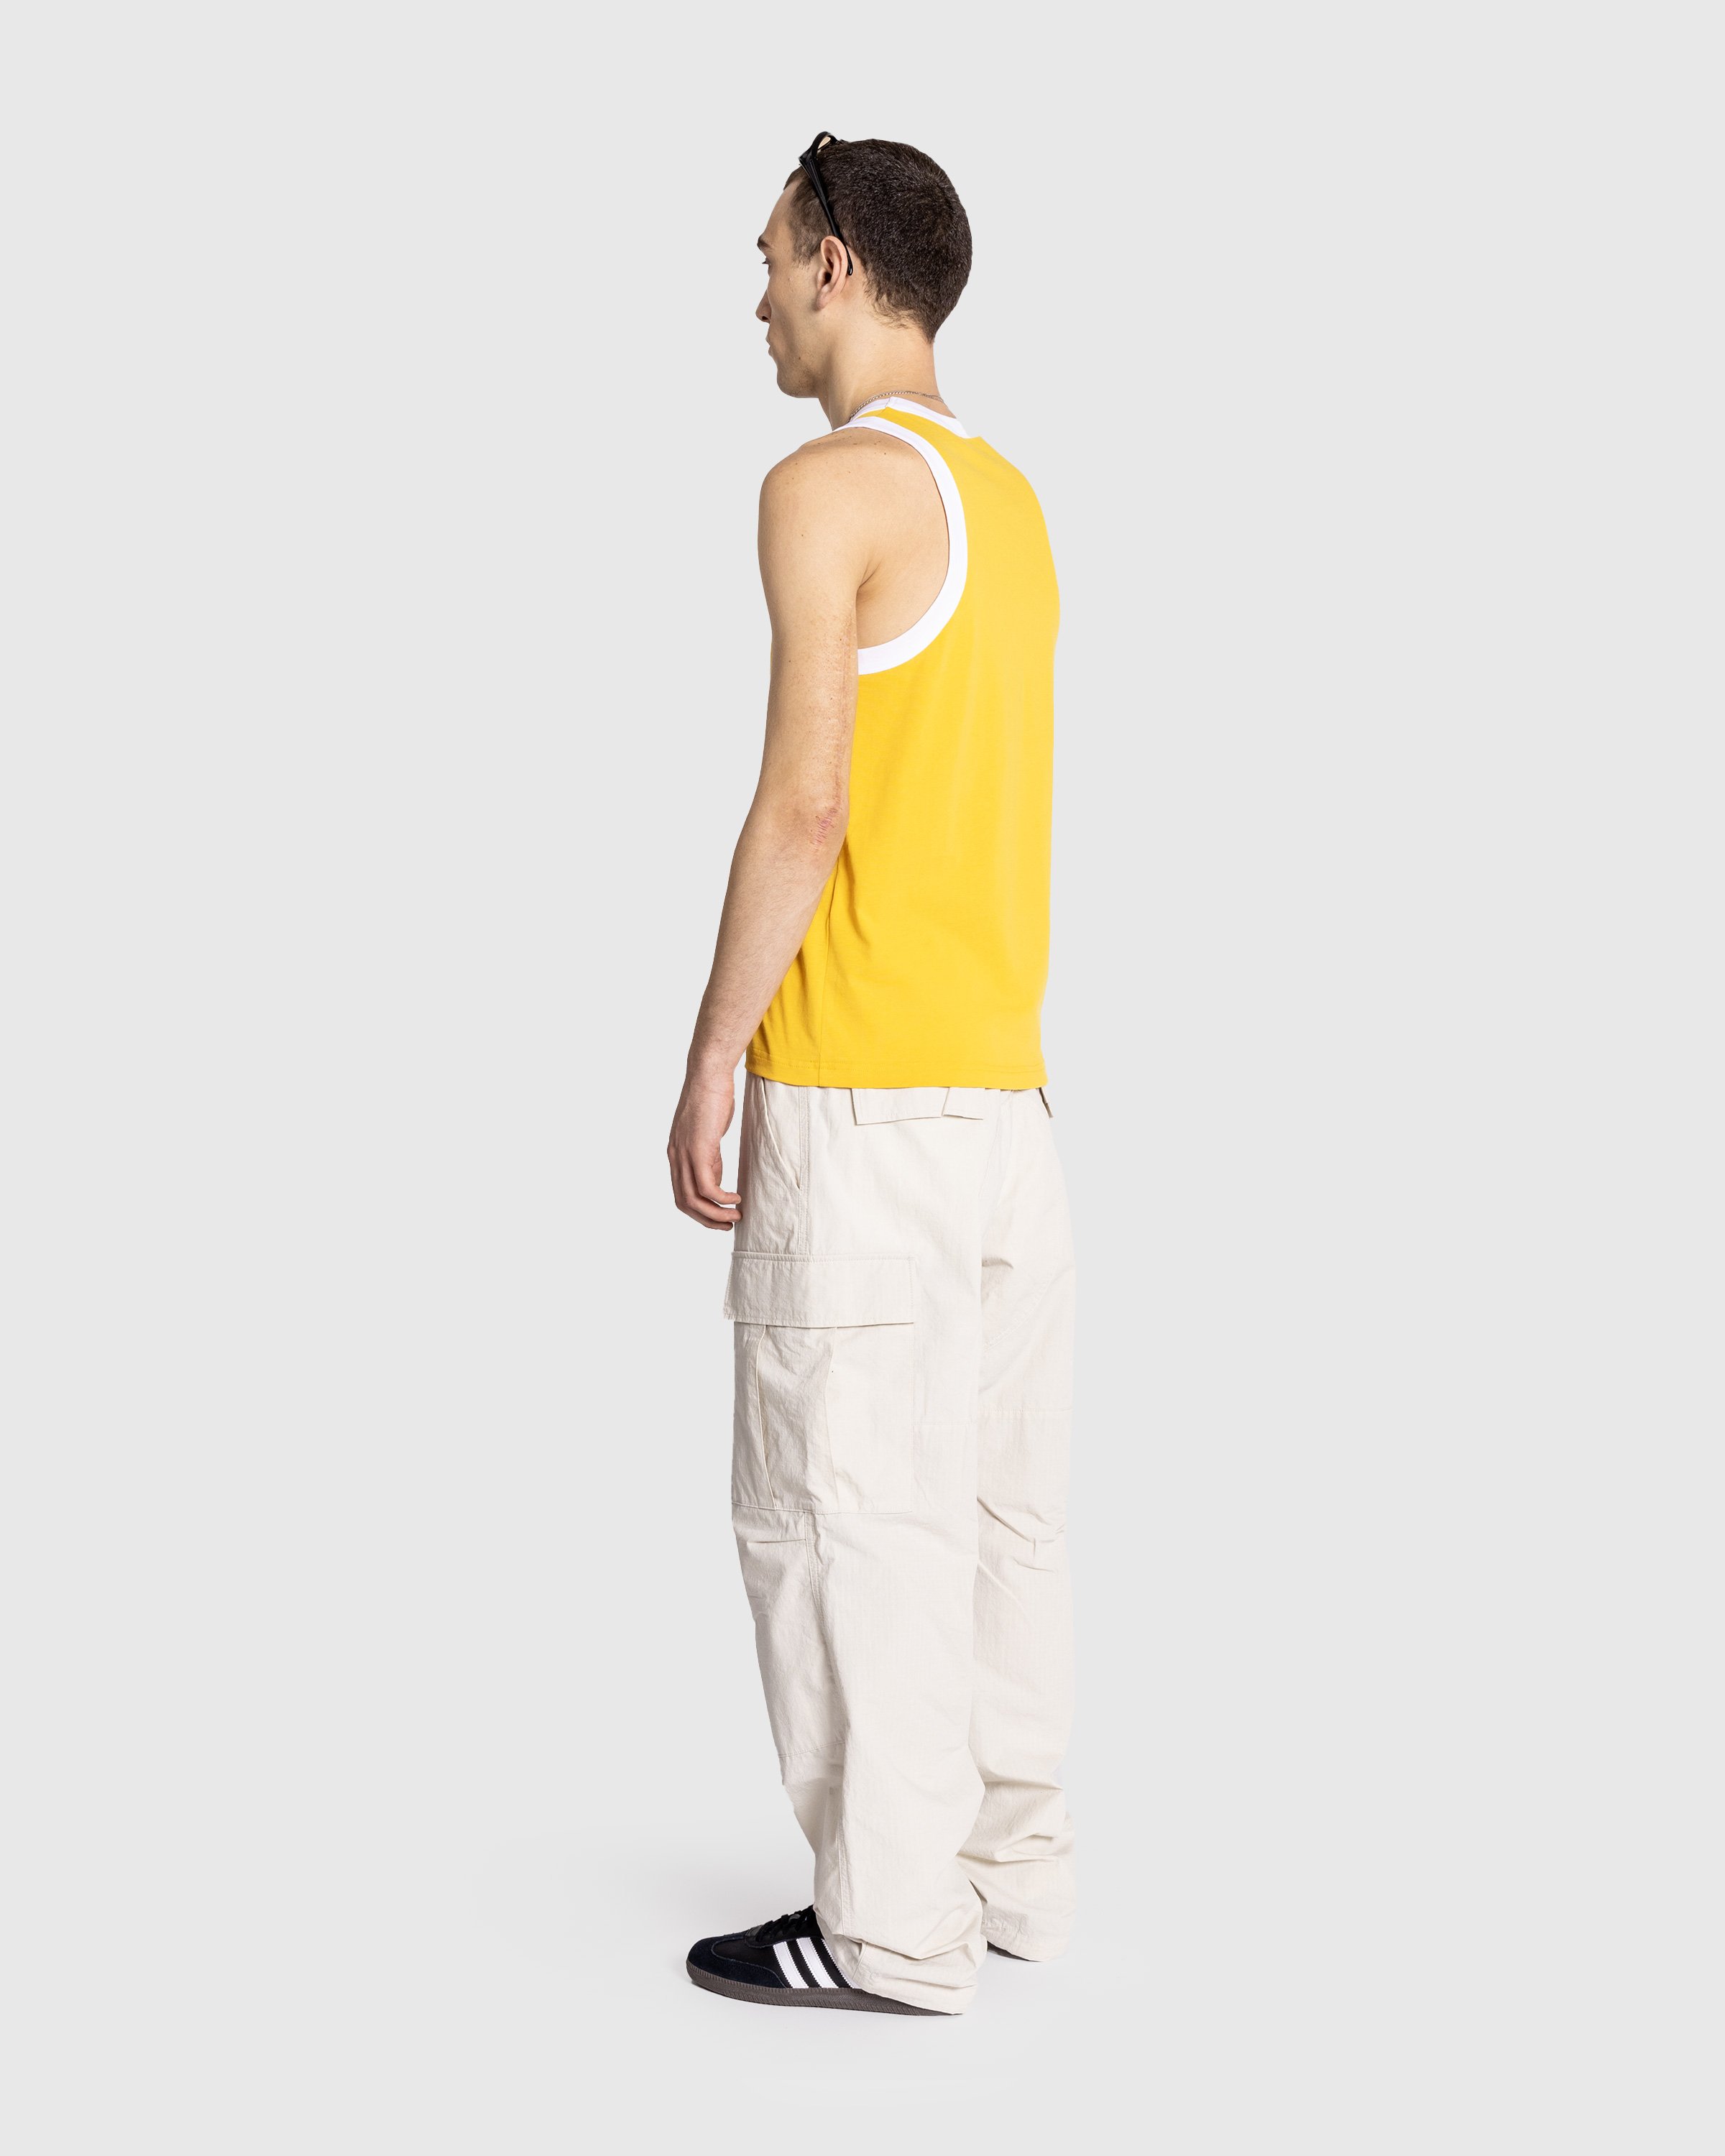 Wales Bonner - Plain T-Shirt Jersey Turmeric - Clothing - Yellow - Image 4